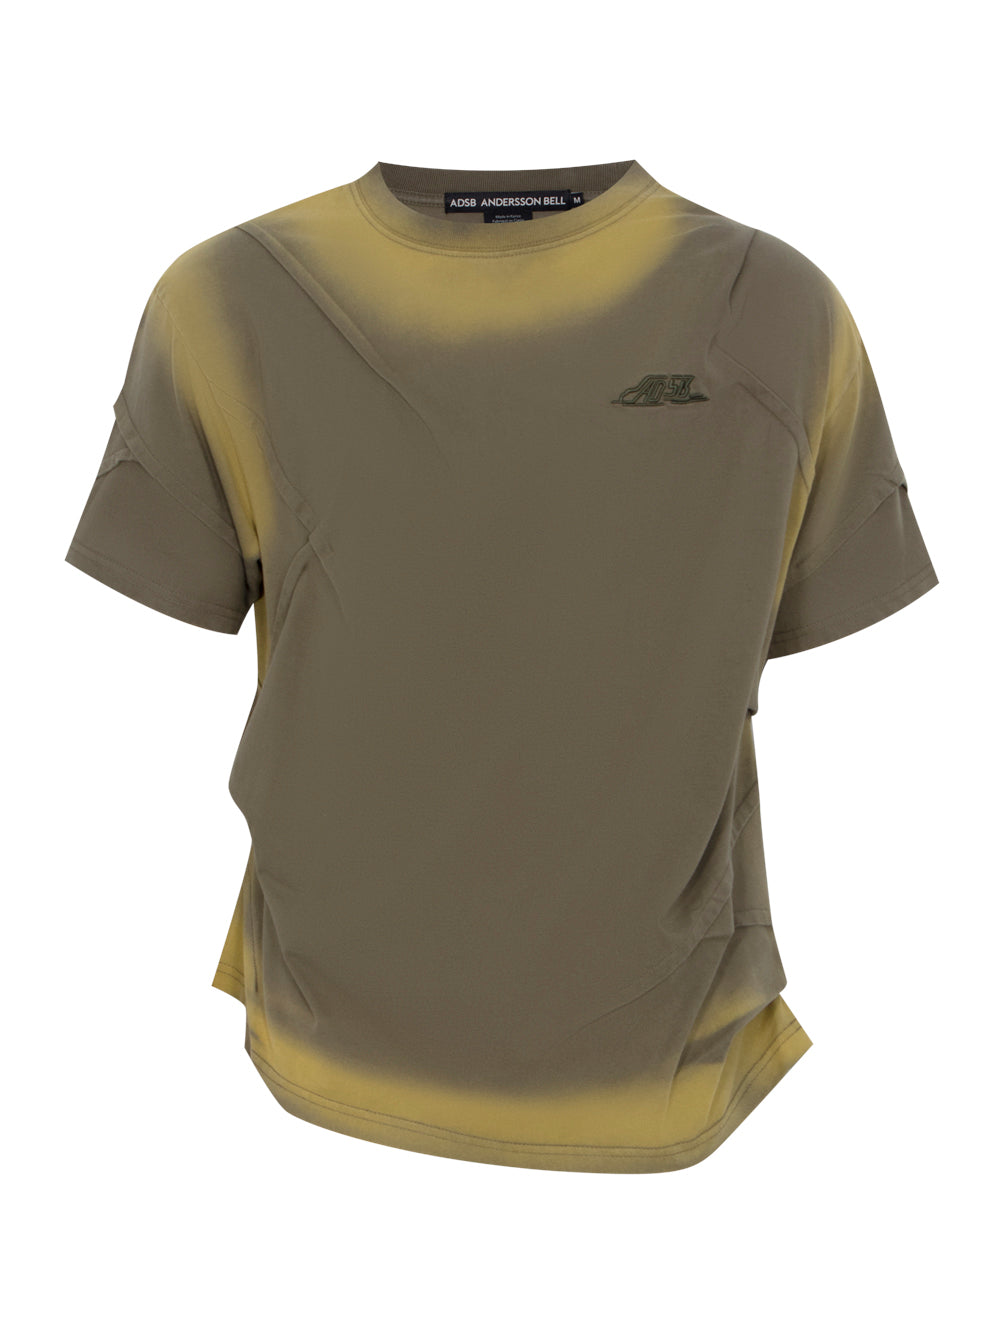 Mardro Gradient T-shirt (Khaki)